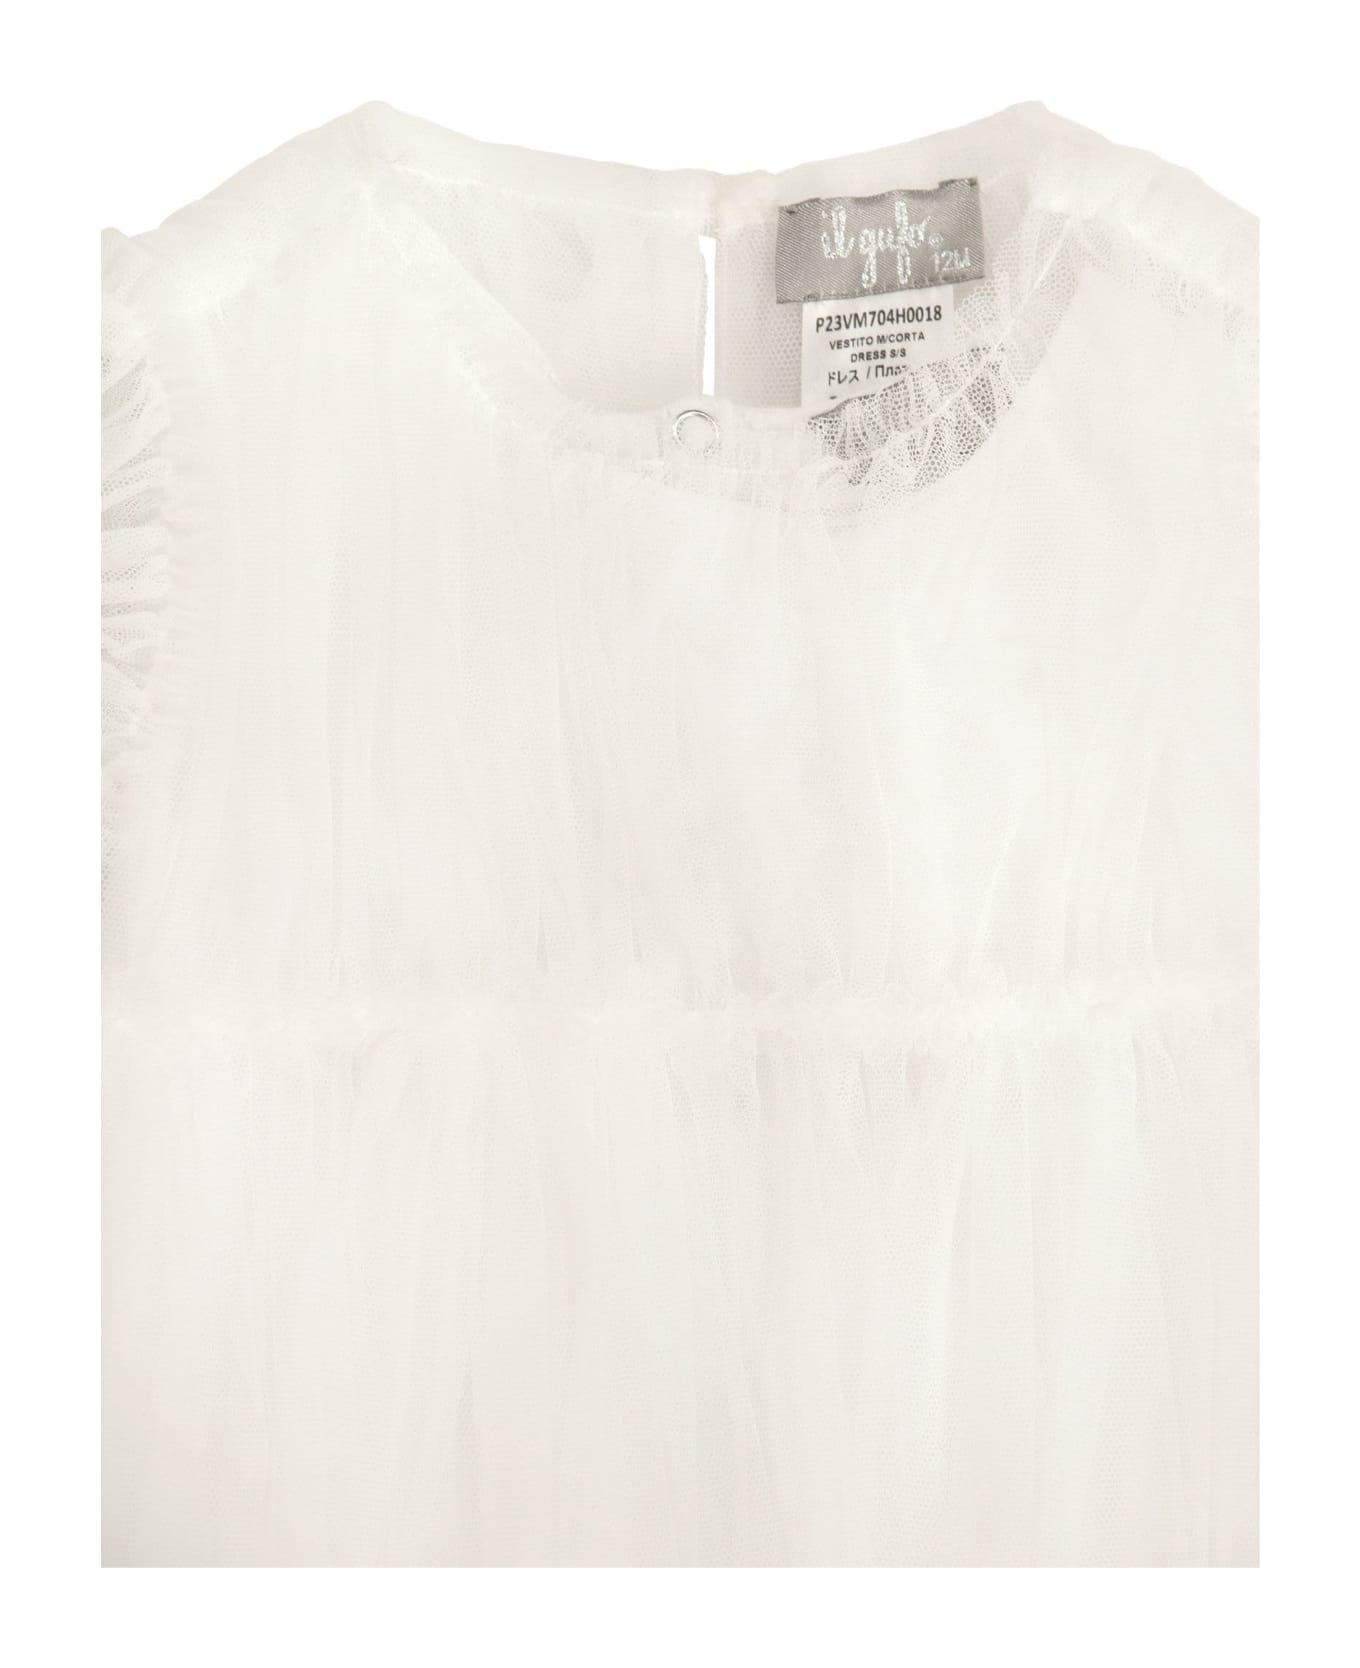 Il Gufo Tulle Baby Dress - White ワンピース＆ドレス